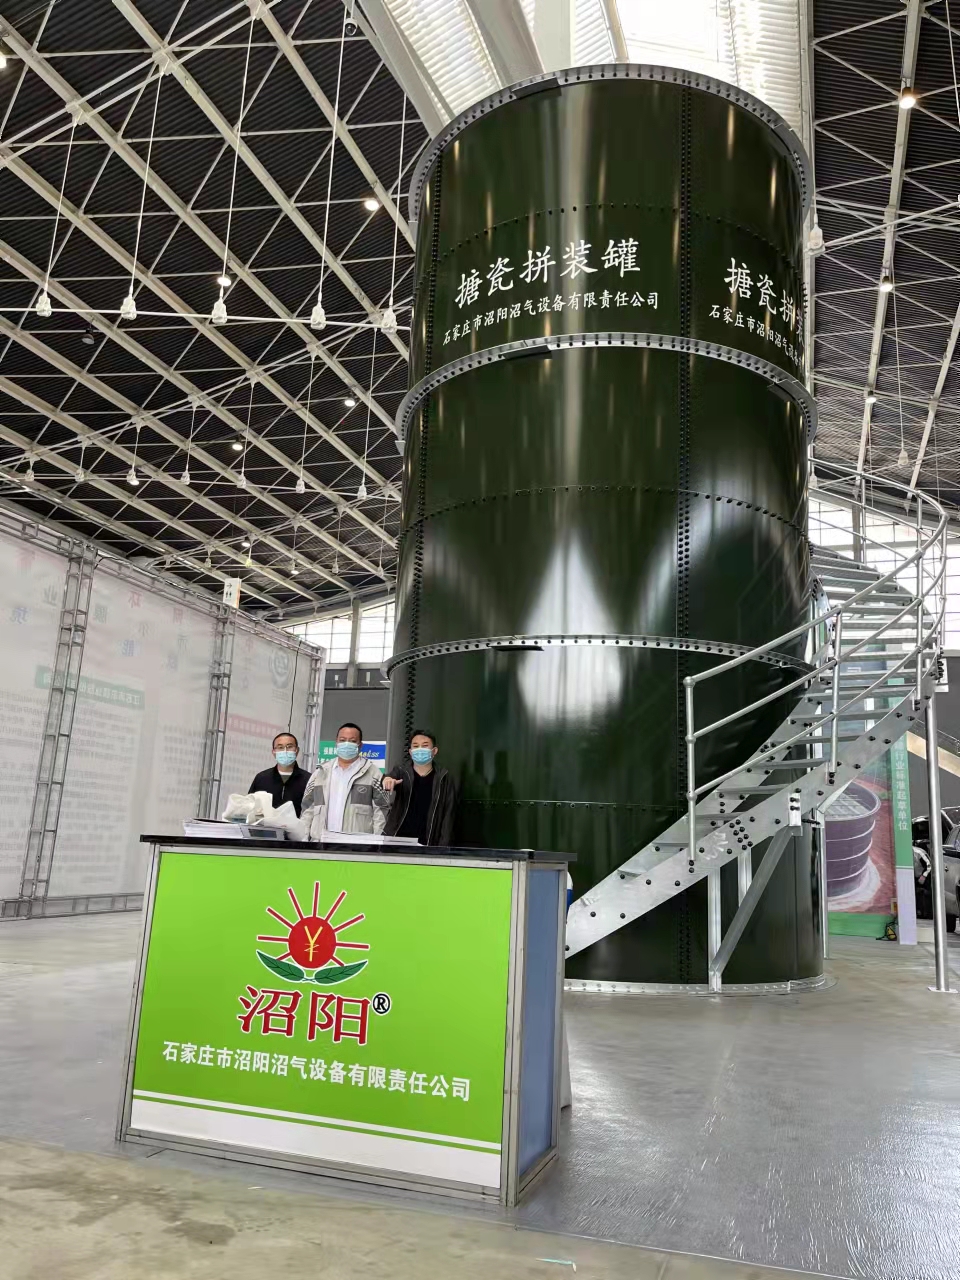 sample tank for Shijiazhuang environmental fair